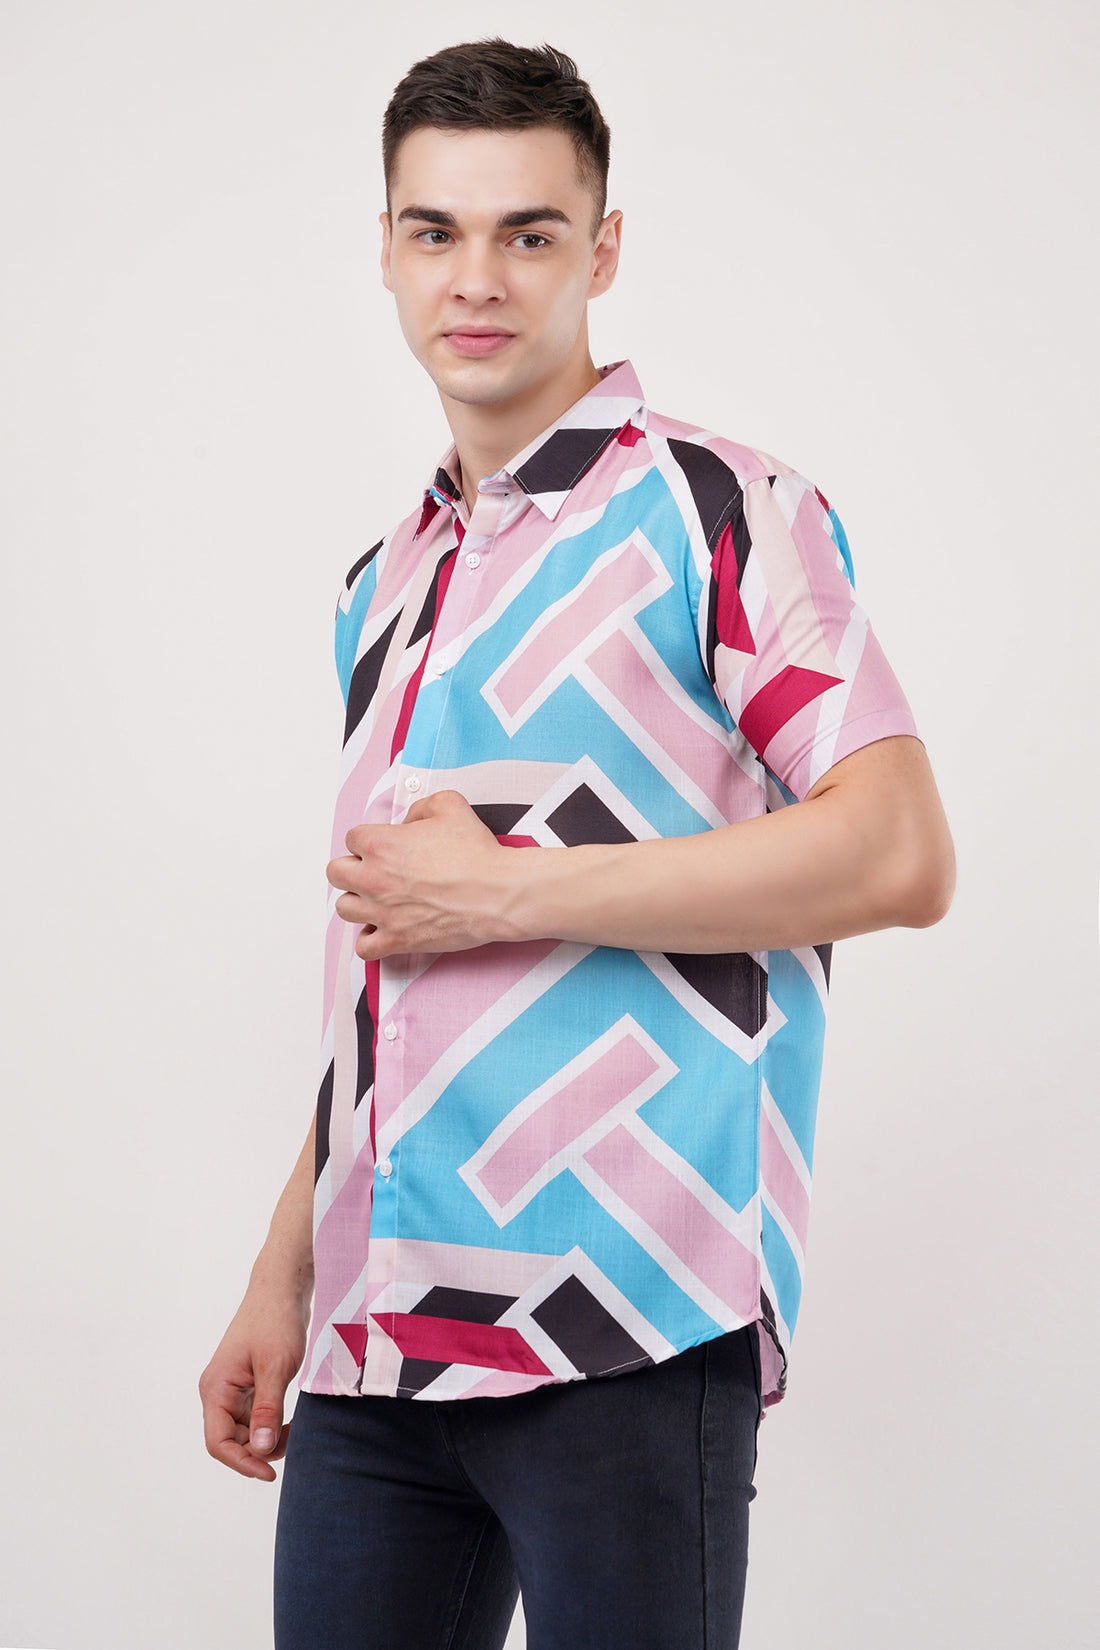 Half Sleeve Cuban Collar Printed Summer Men's Shirts by ColourJoyLondon Available in 11 Designs